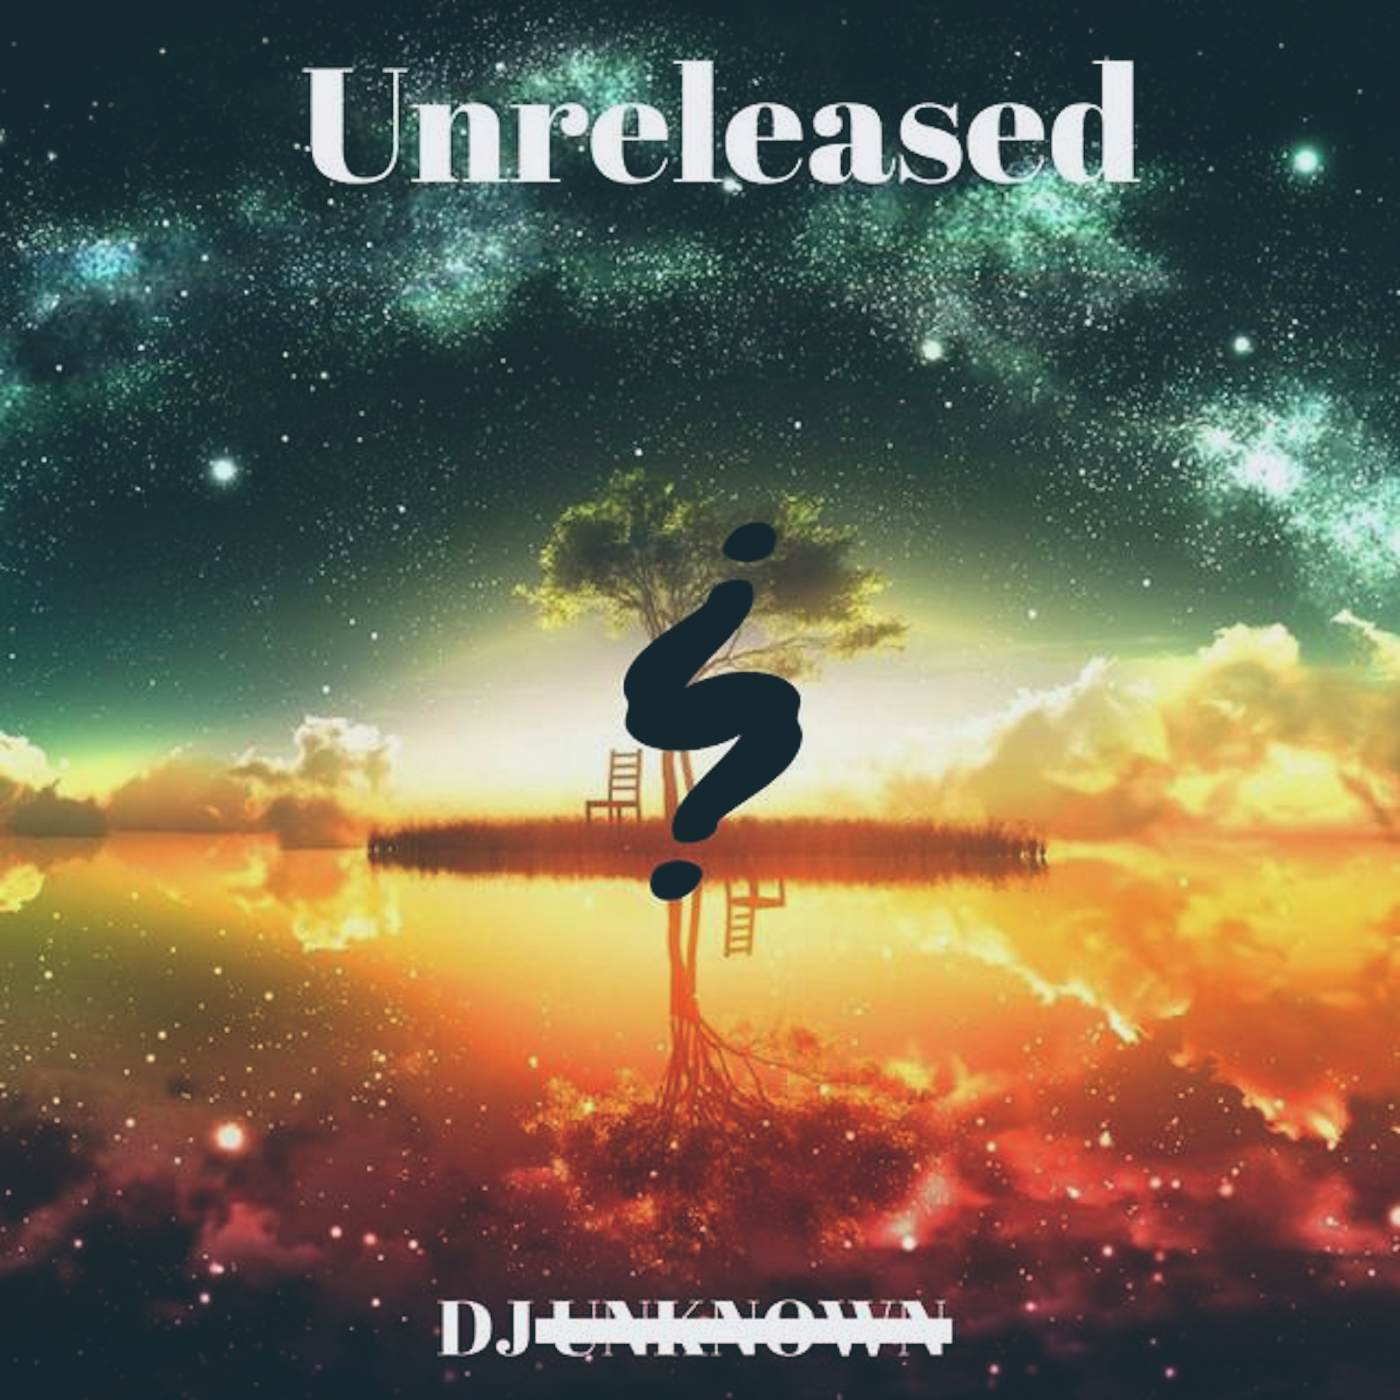 DJ Unknown